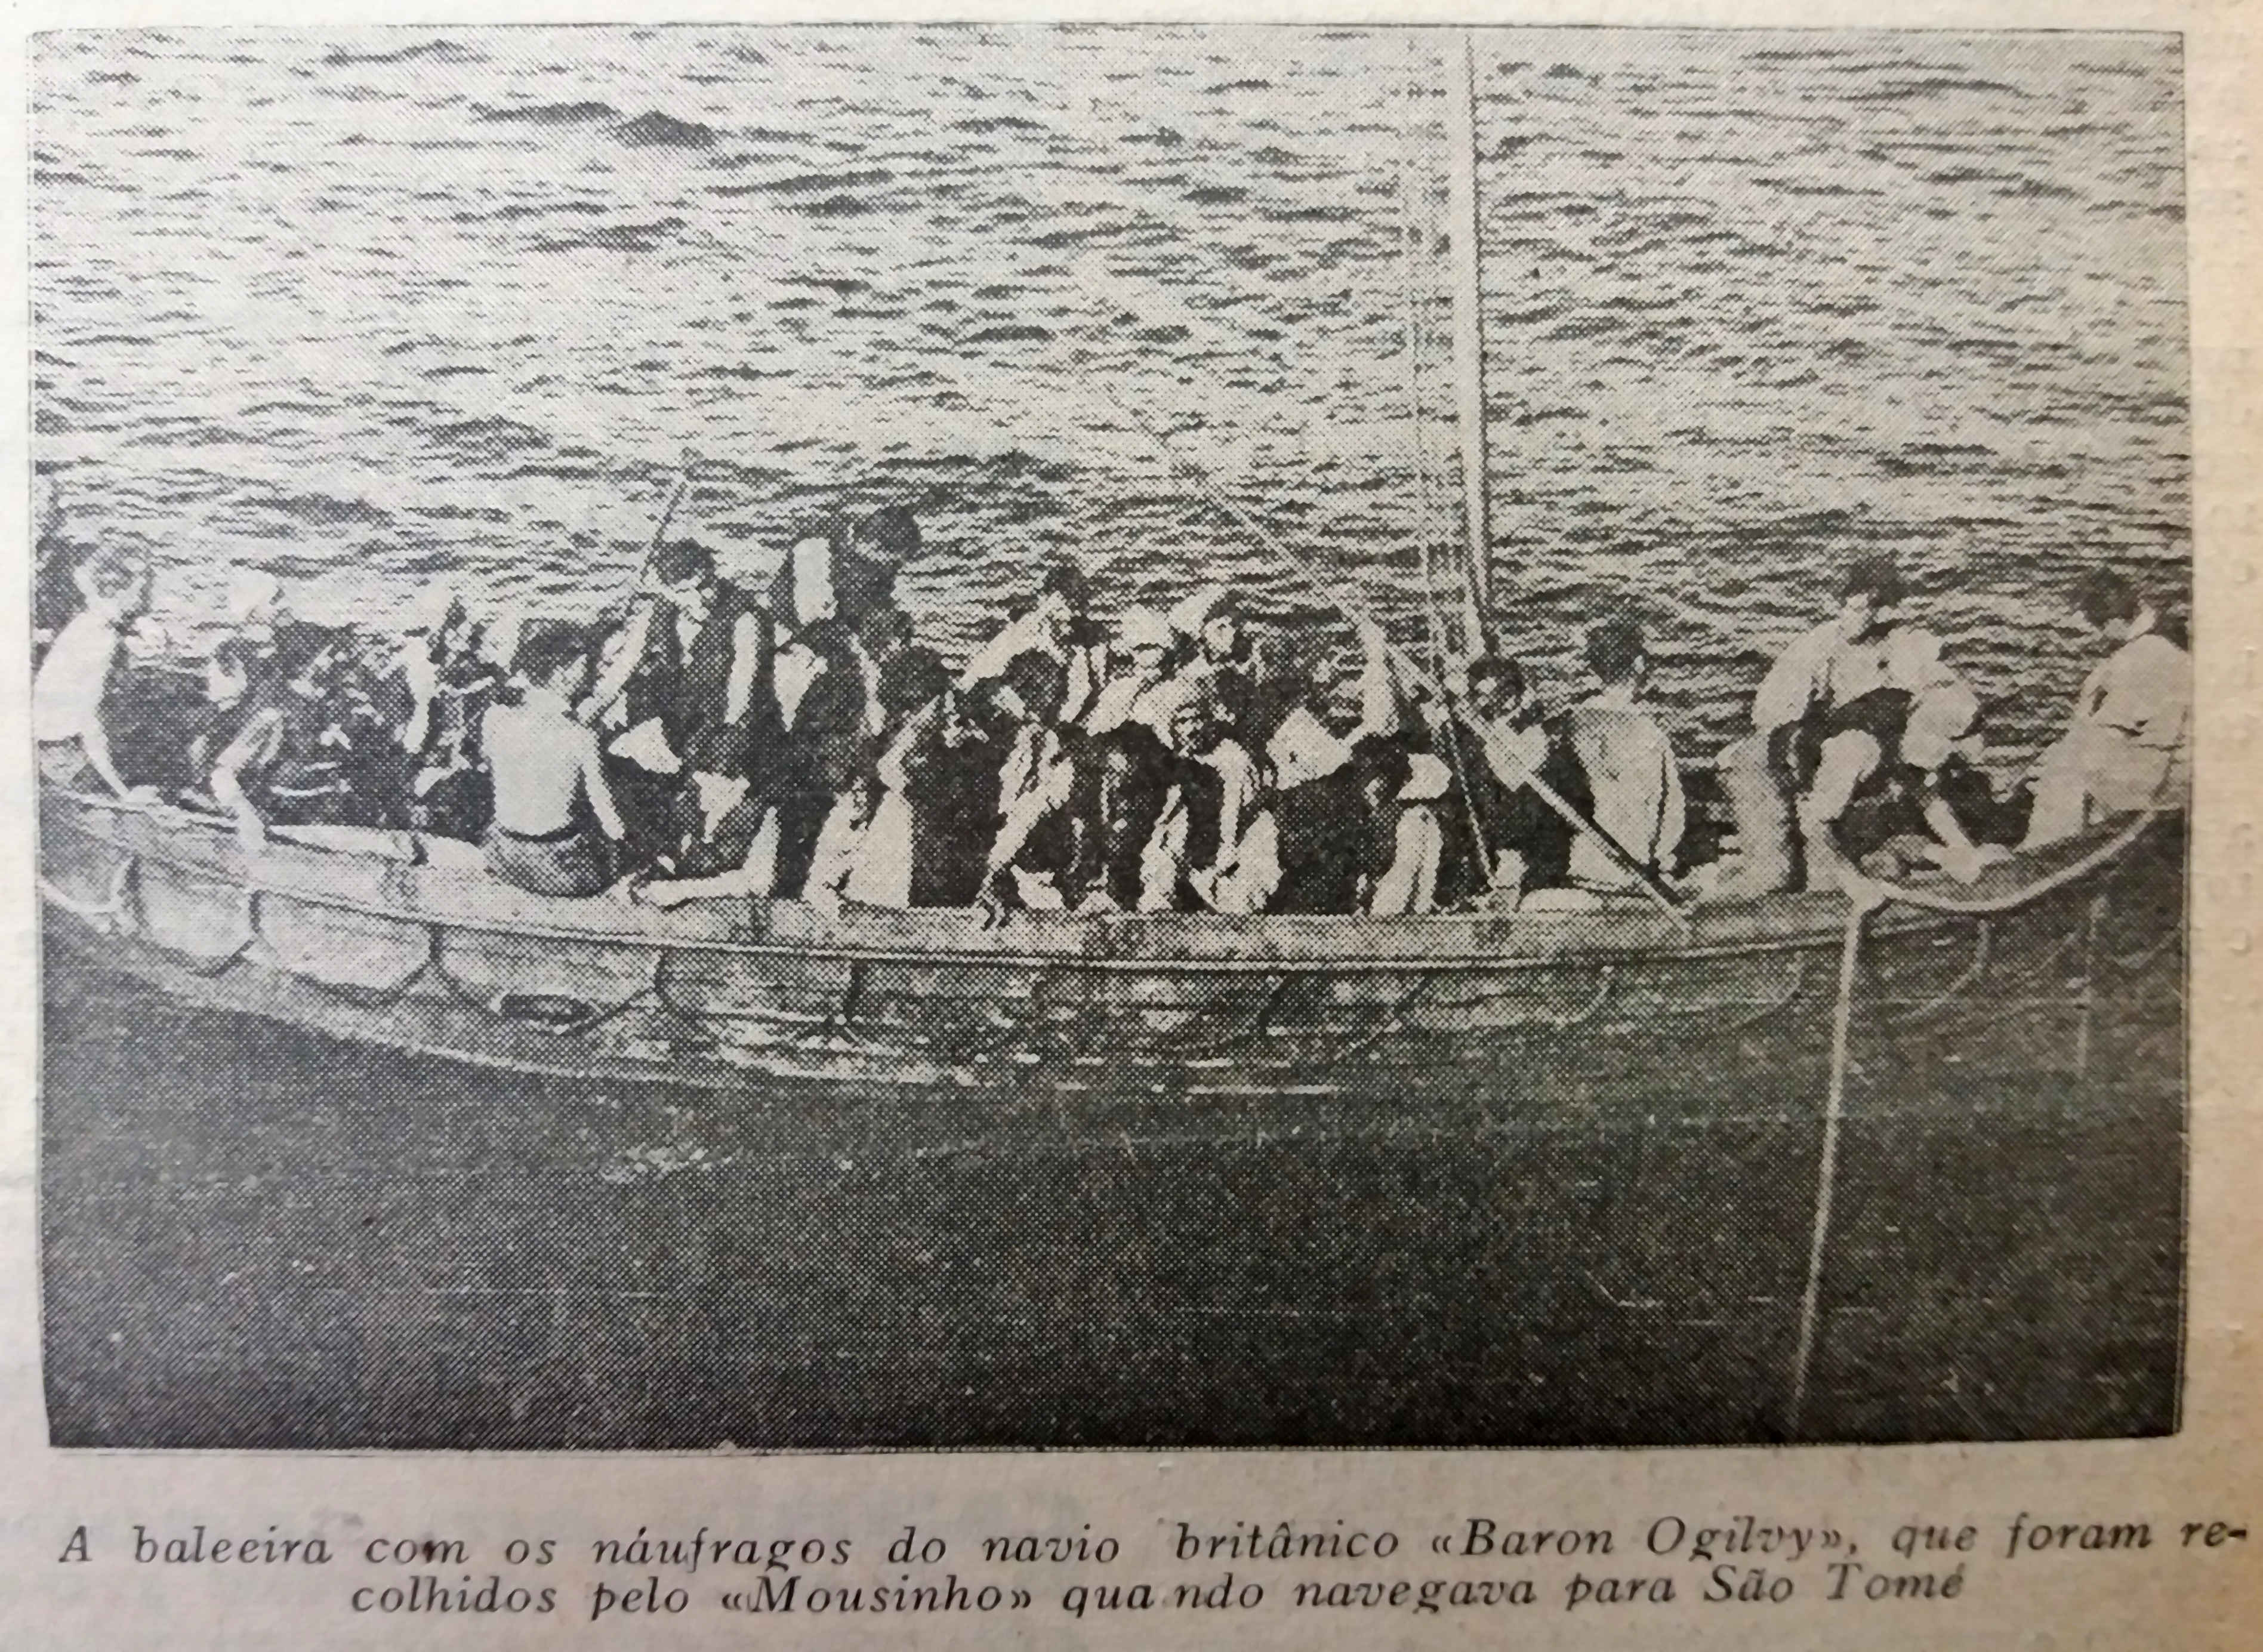 The castaways being found by the Mouzinho